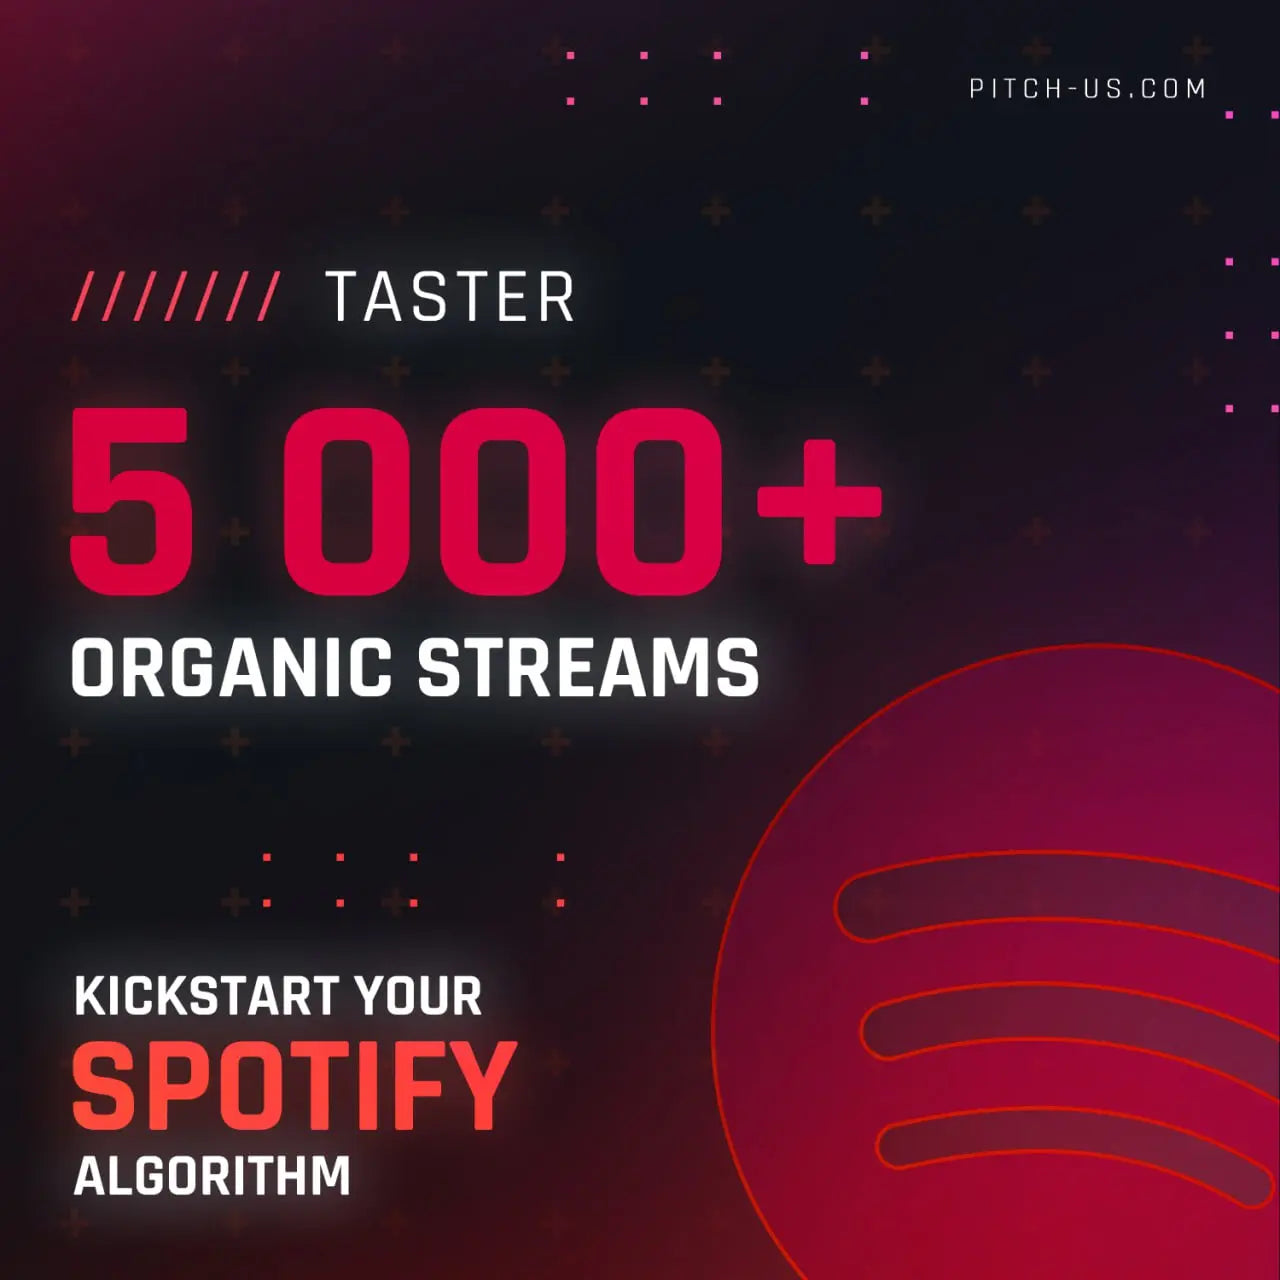 Taster (5,000+ Organic Streams) Pitch Us